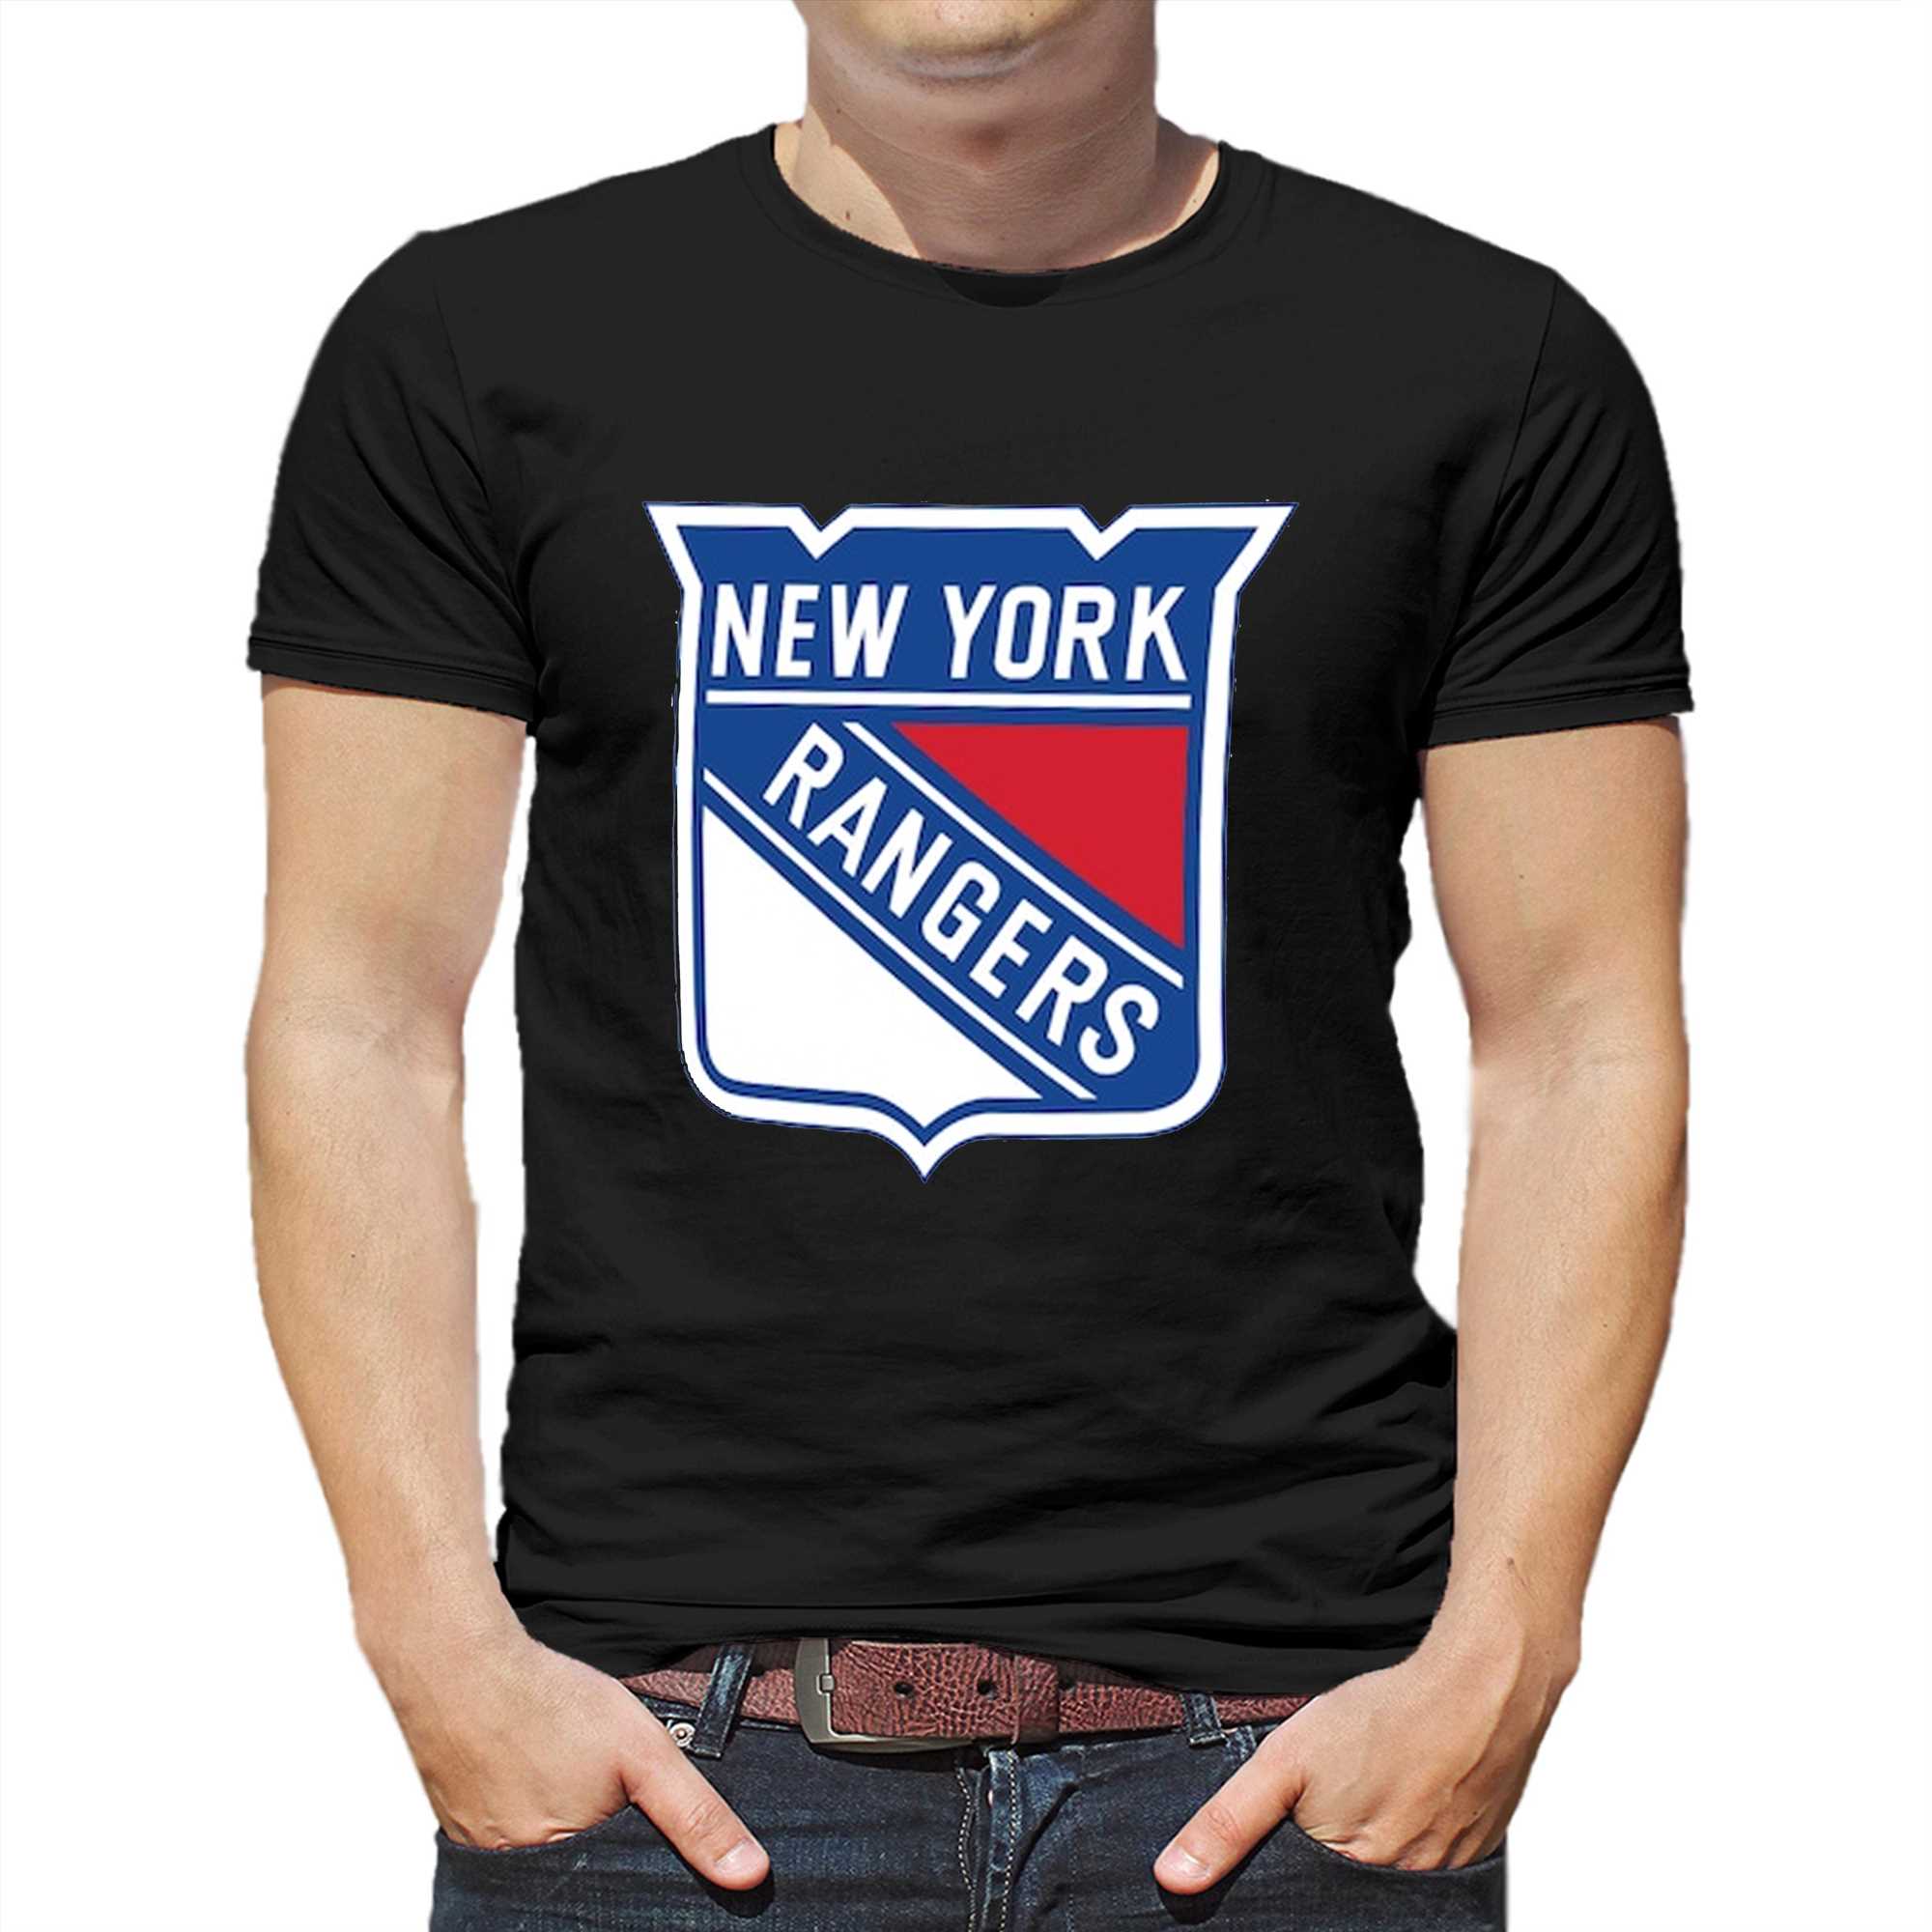 New York Ra.ngers Shirt New York Rang.ers Unisex Shirt 